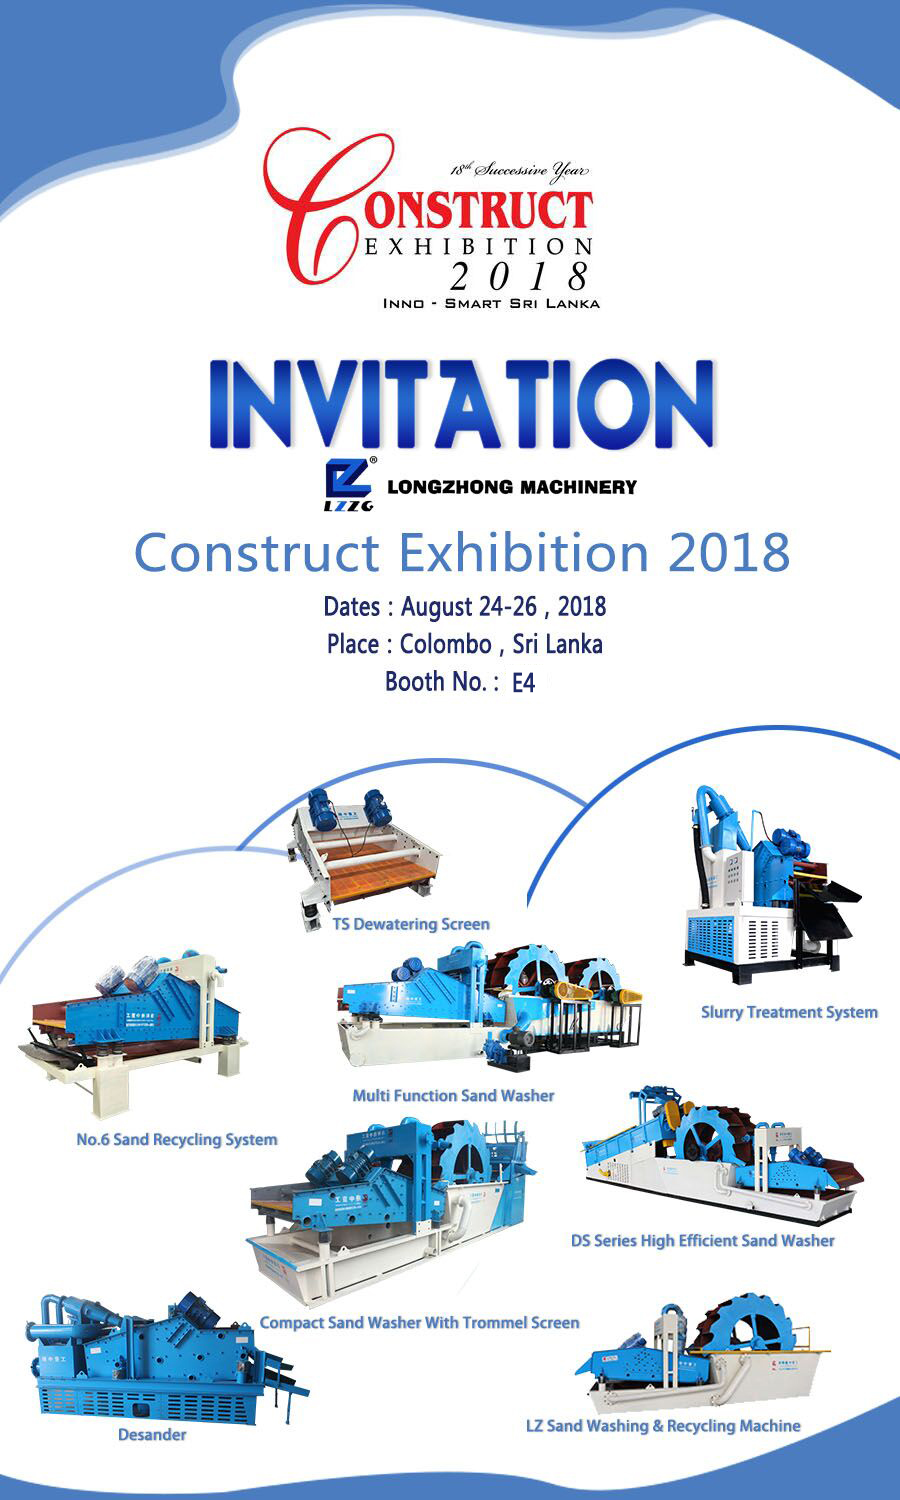 Construct Exhibition 2018 in Sri lanka